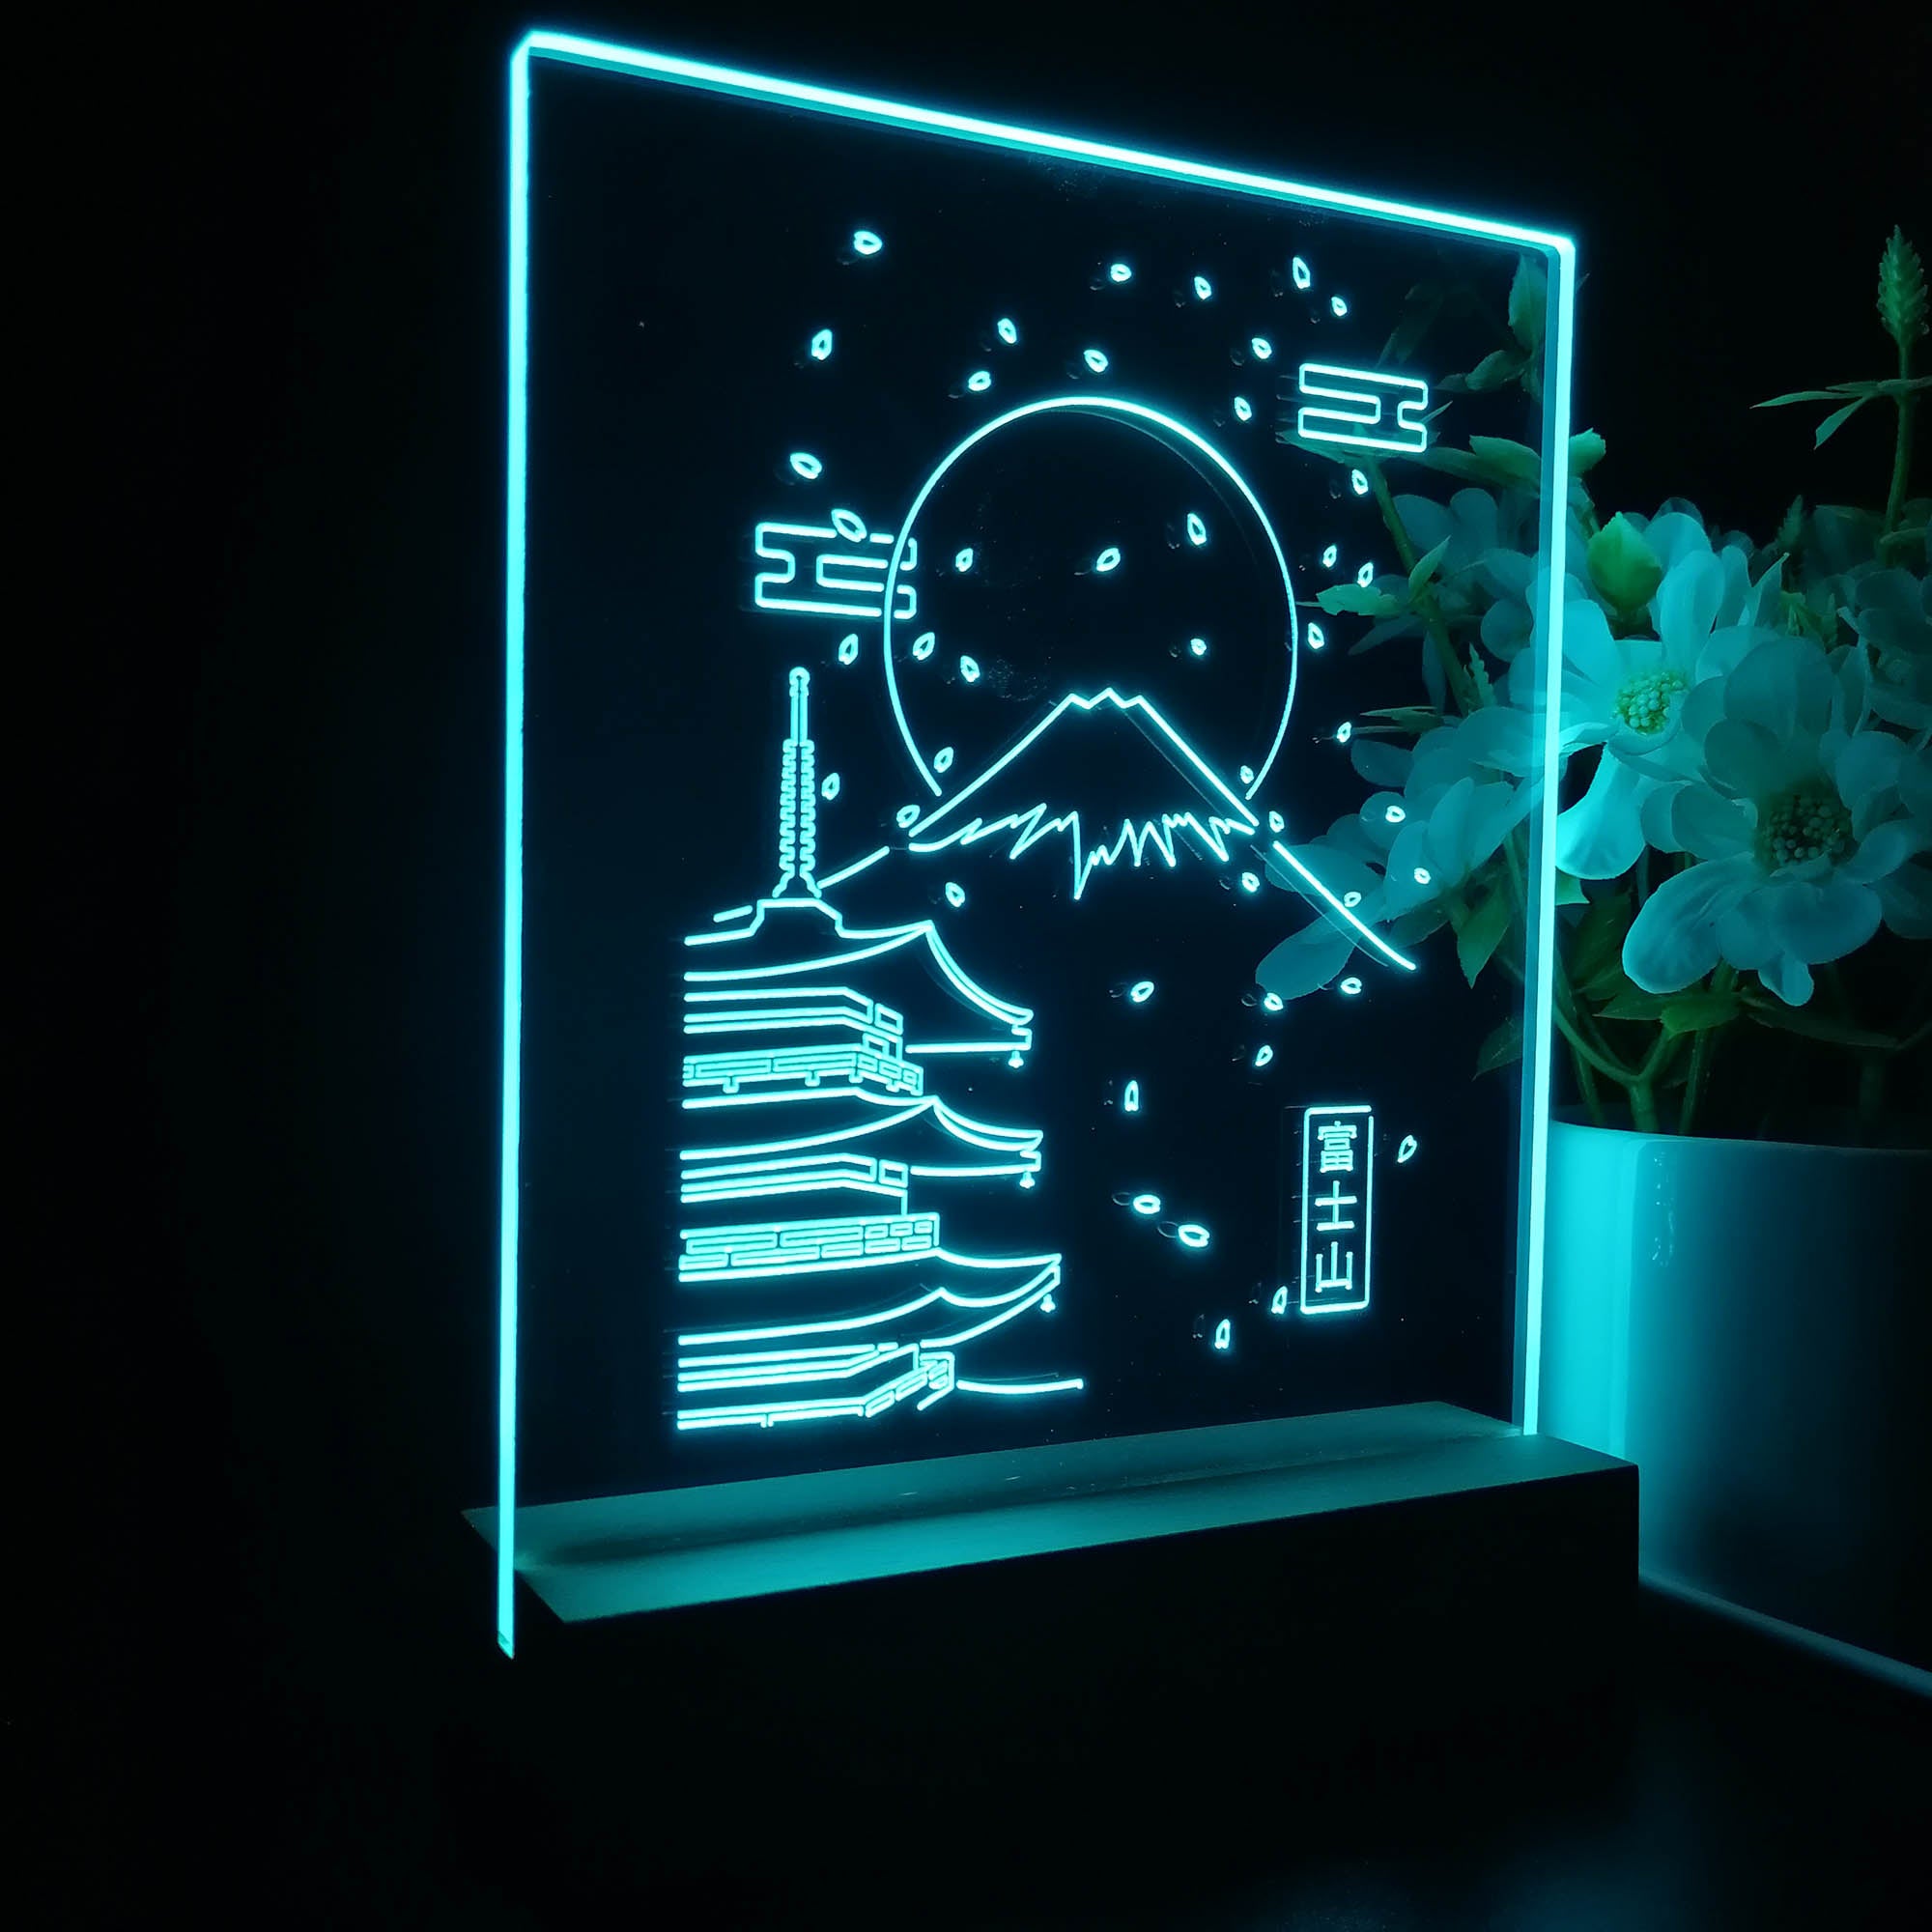 Japan Fuji 3D LED Optical Illusion Sleep Night Light Table Lamp